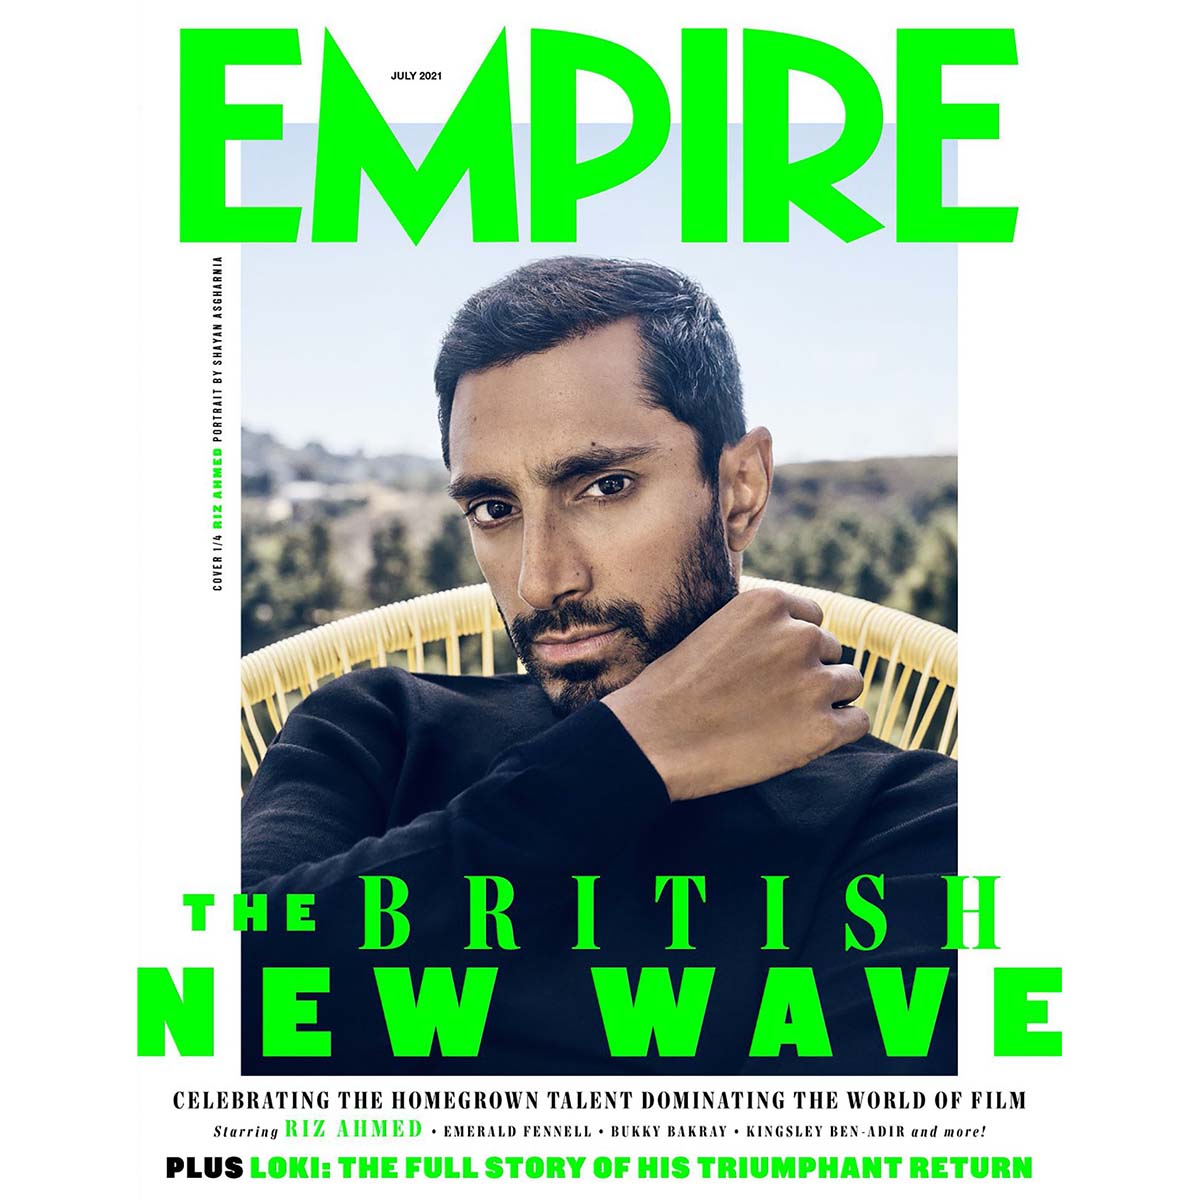 Empire Magazine Issue 390 (July 2021) The British New Wave